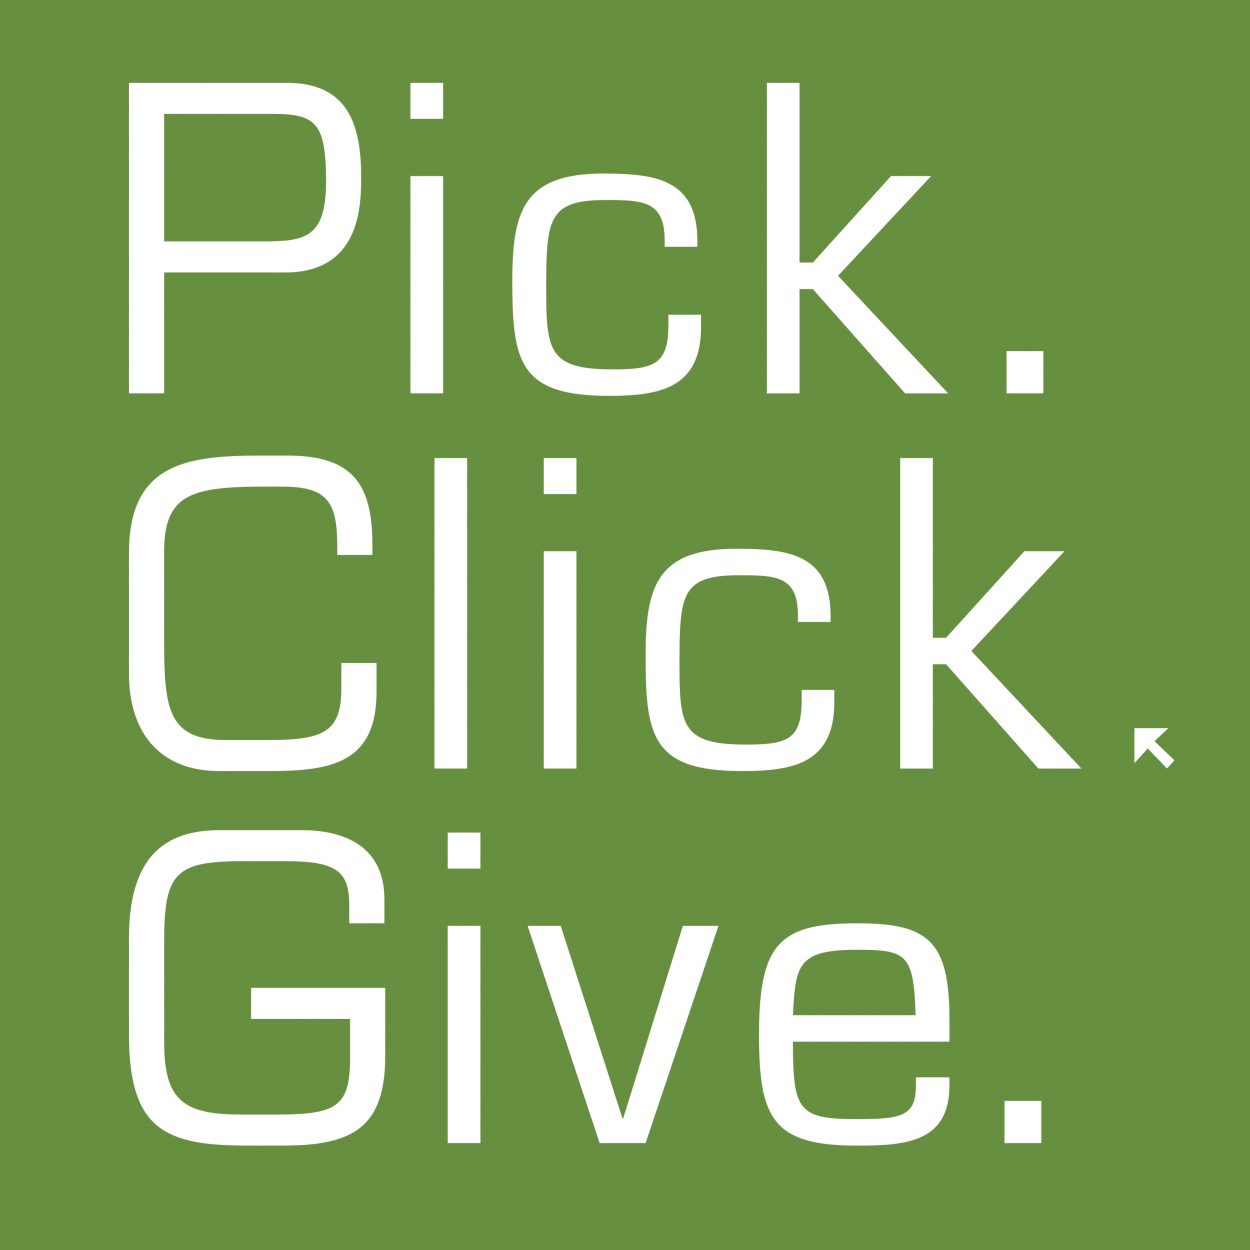 Pick. Click. Give.